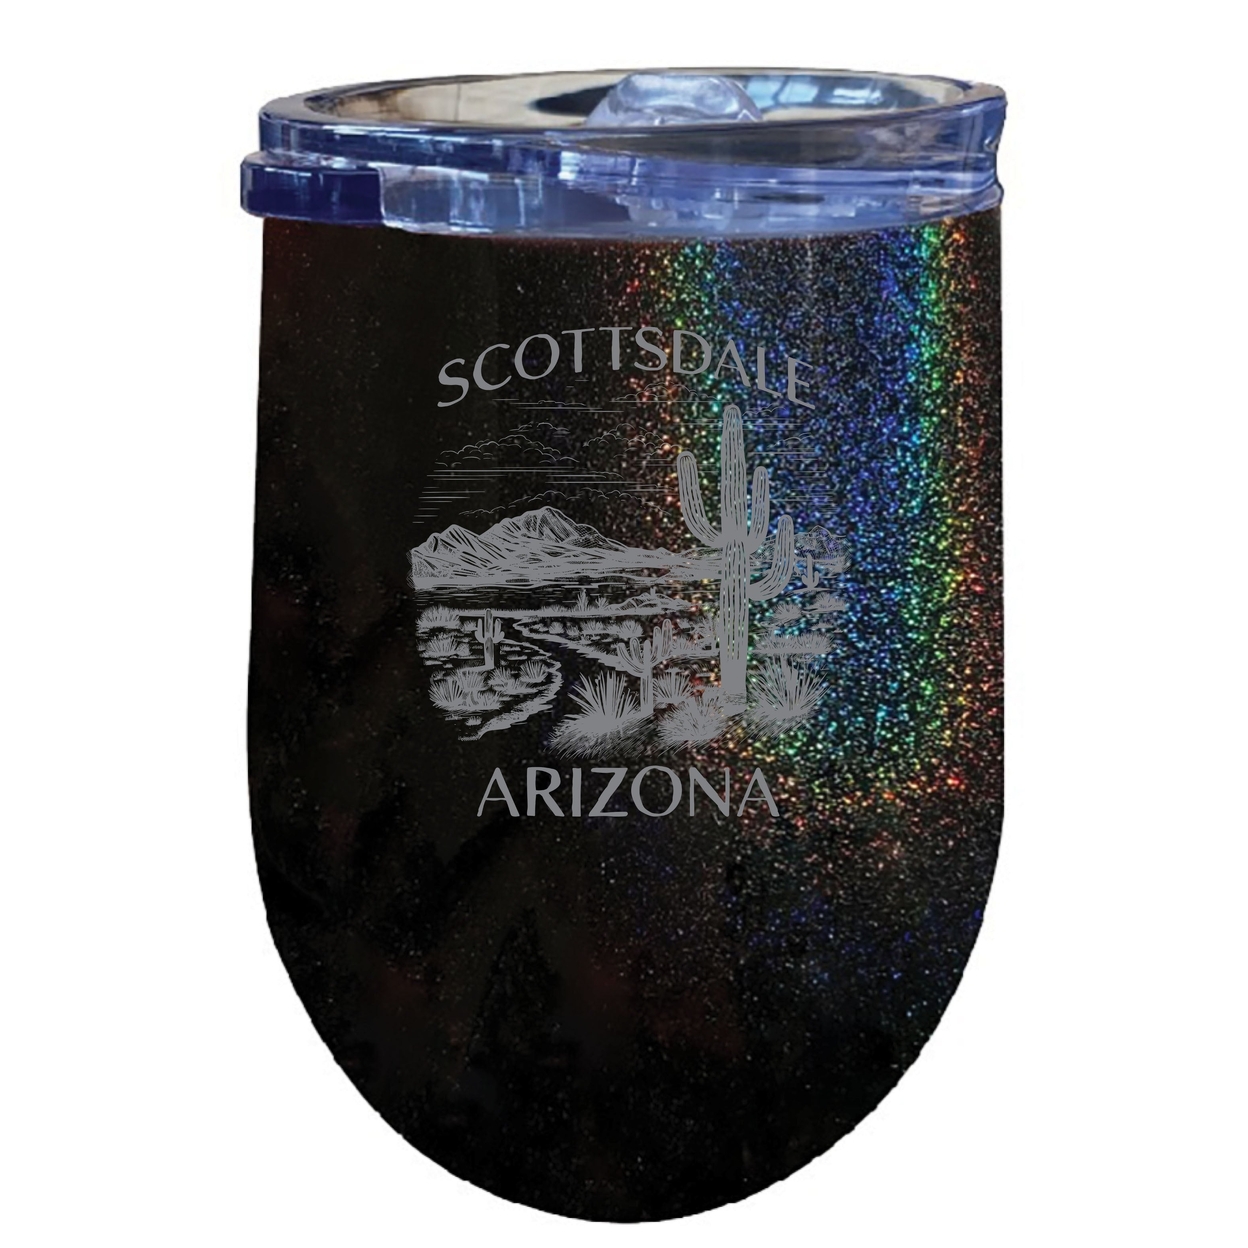 Scottsdale Arizona Souvenir 12 Oz Engraved Insulated Wine Stainless Steel Tumbler - Seafoam,,Single Unit